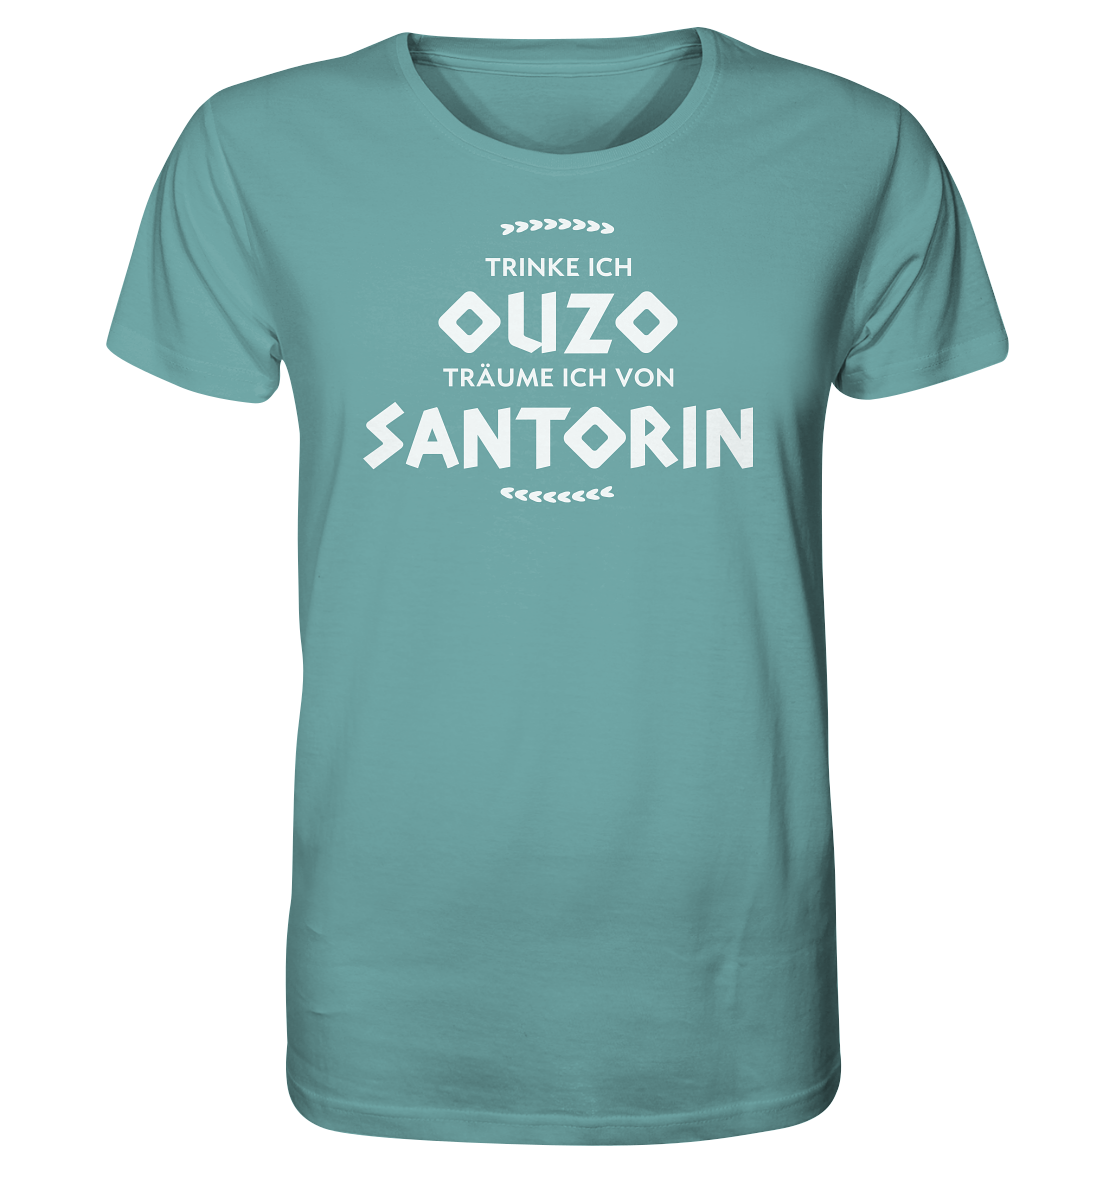 When I drink Ouzo I dream of Santorini - Organic Shirt